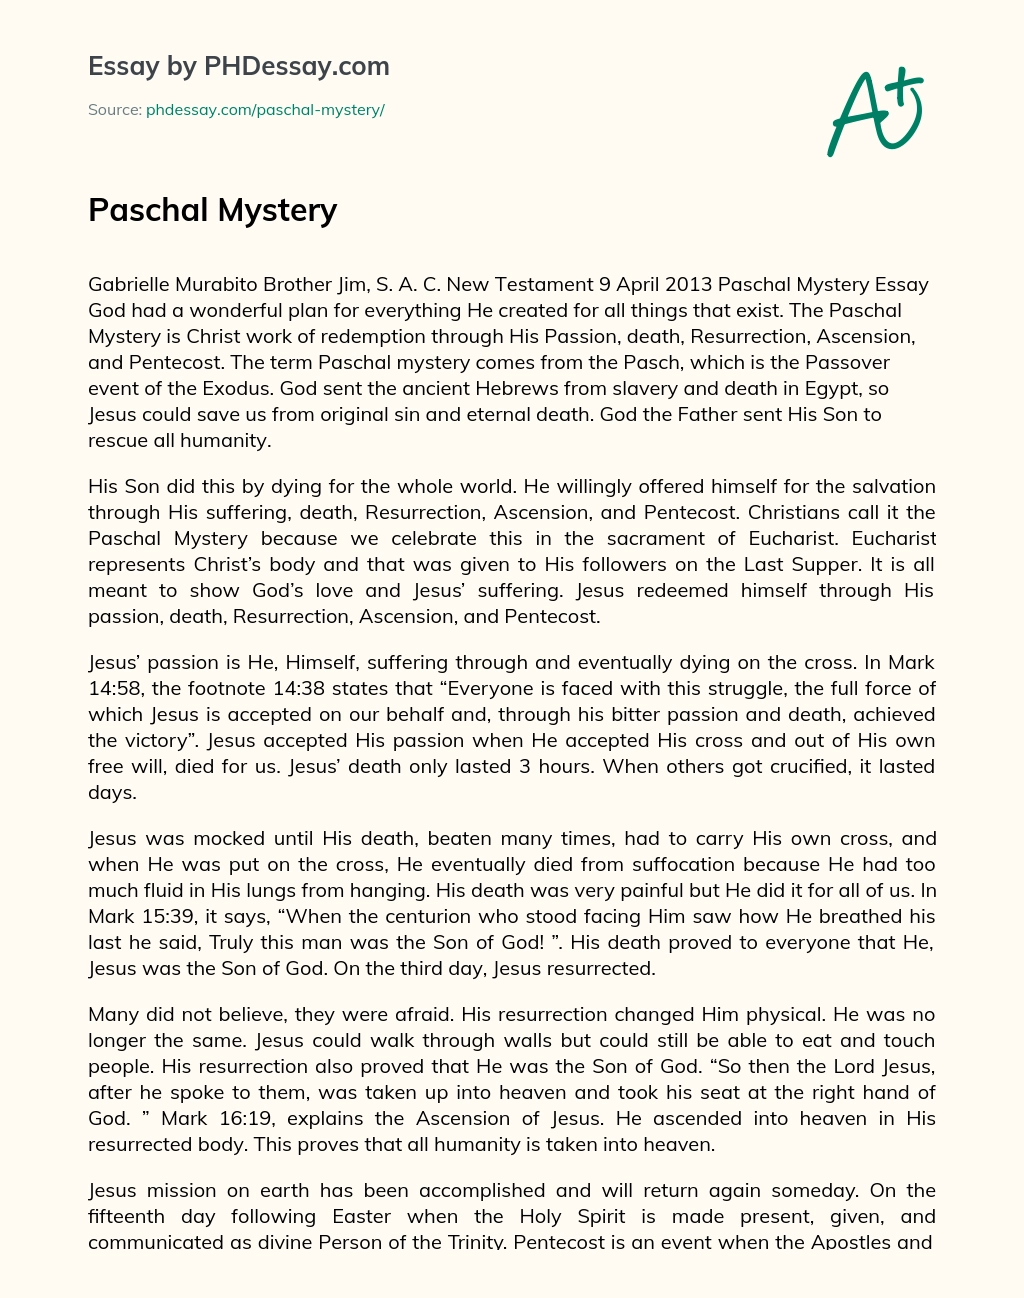 Paschal Mystery essay